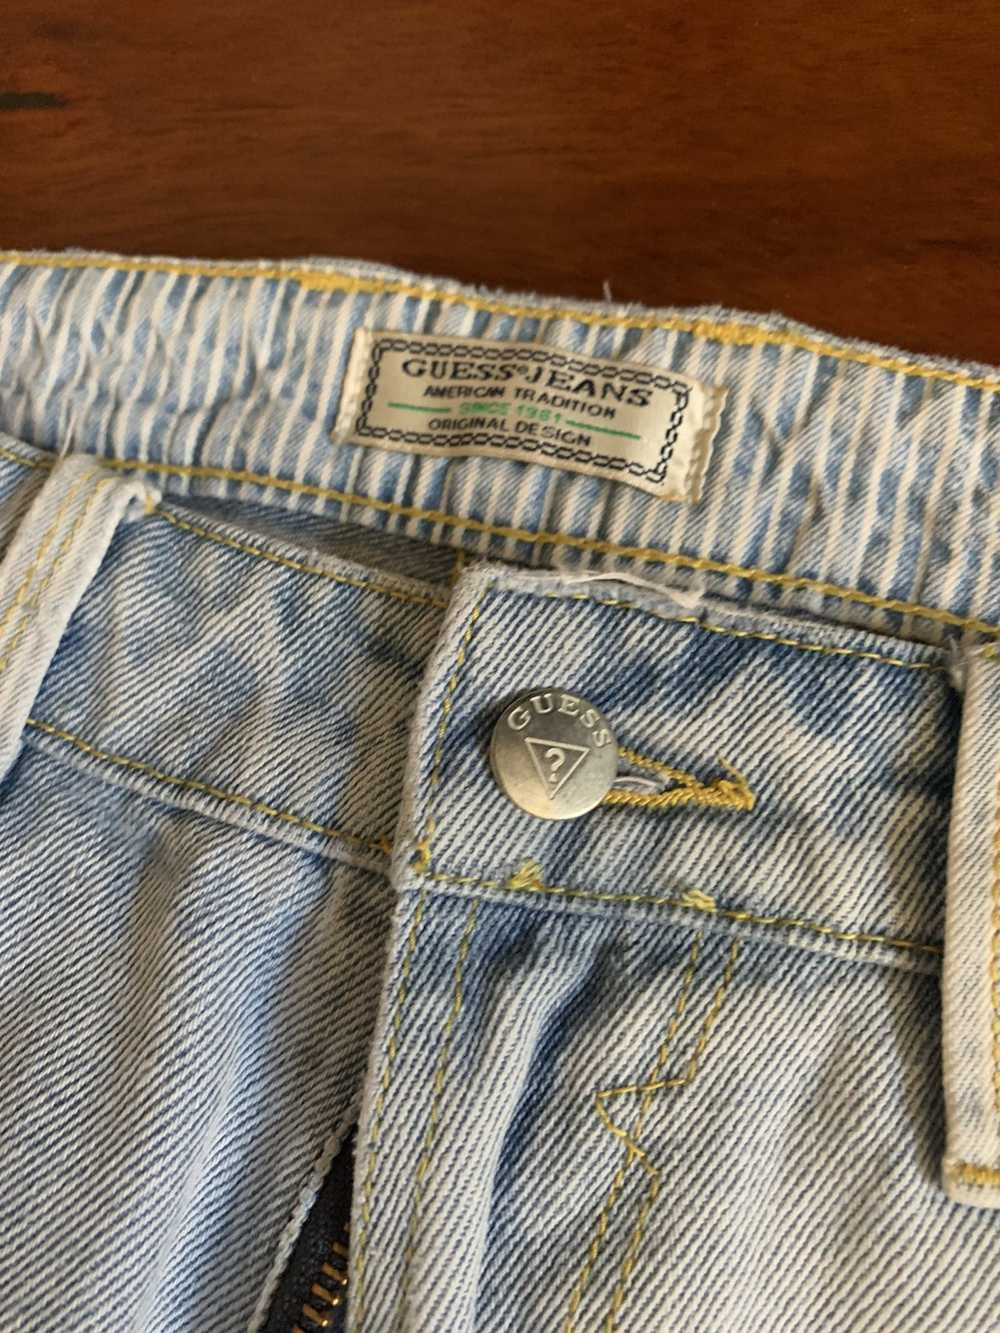 Guess Guess 1980’s Retro Vintage Jeans - image 3